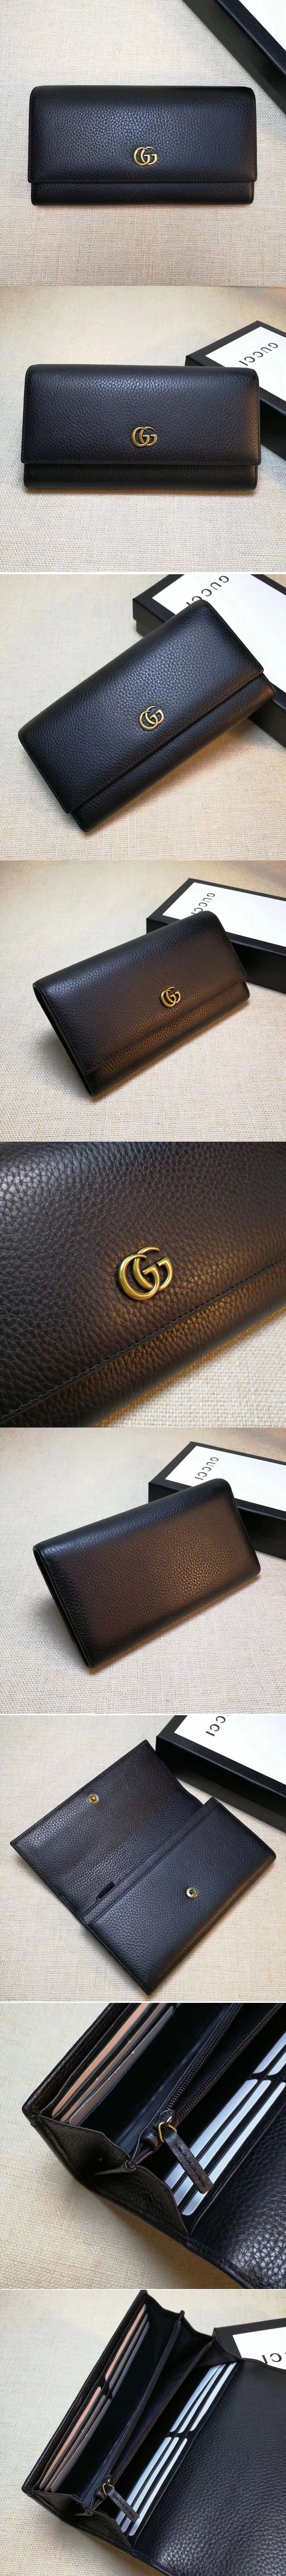 Replica Gucci 456116 Leather Continental Wallet Black